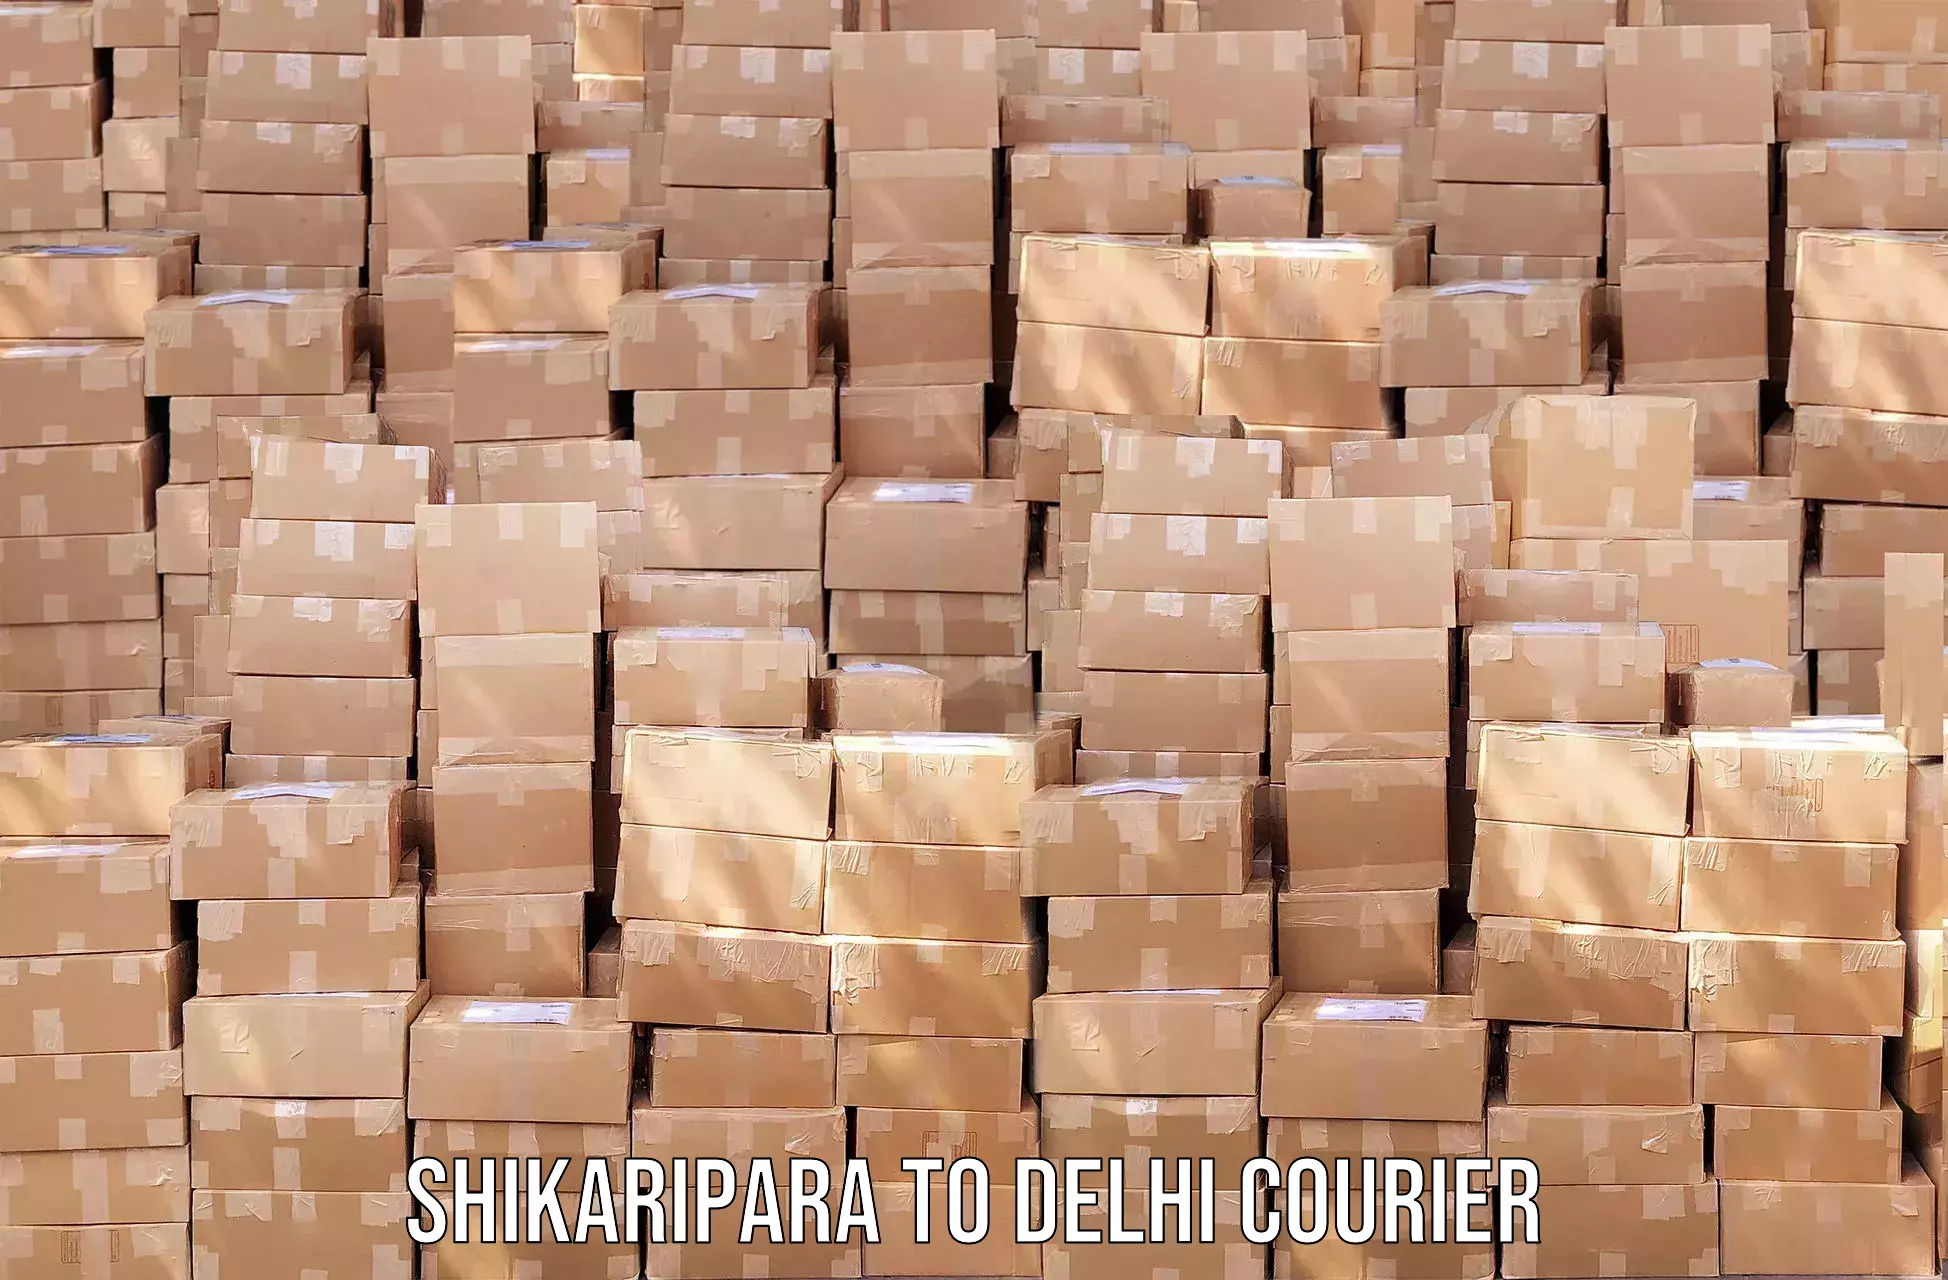 Next-day freight services Shikaripara to NCR